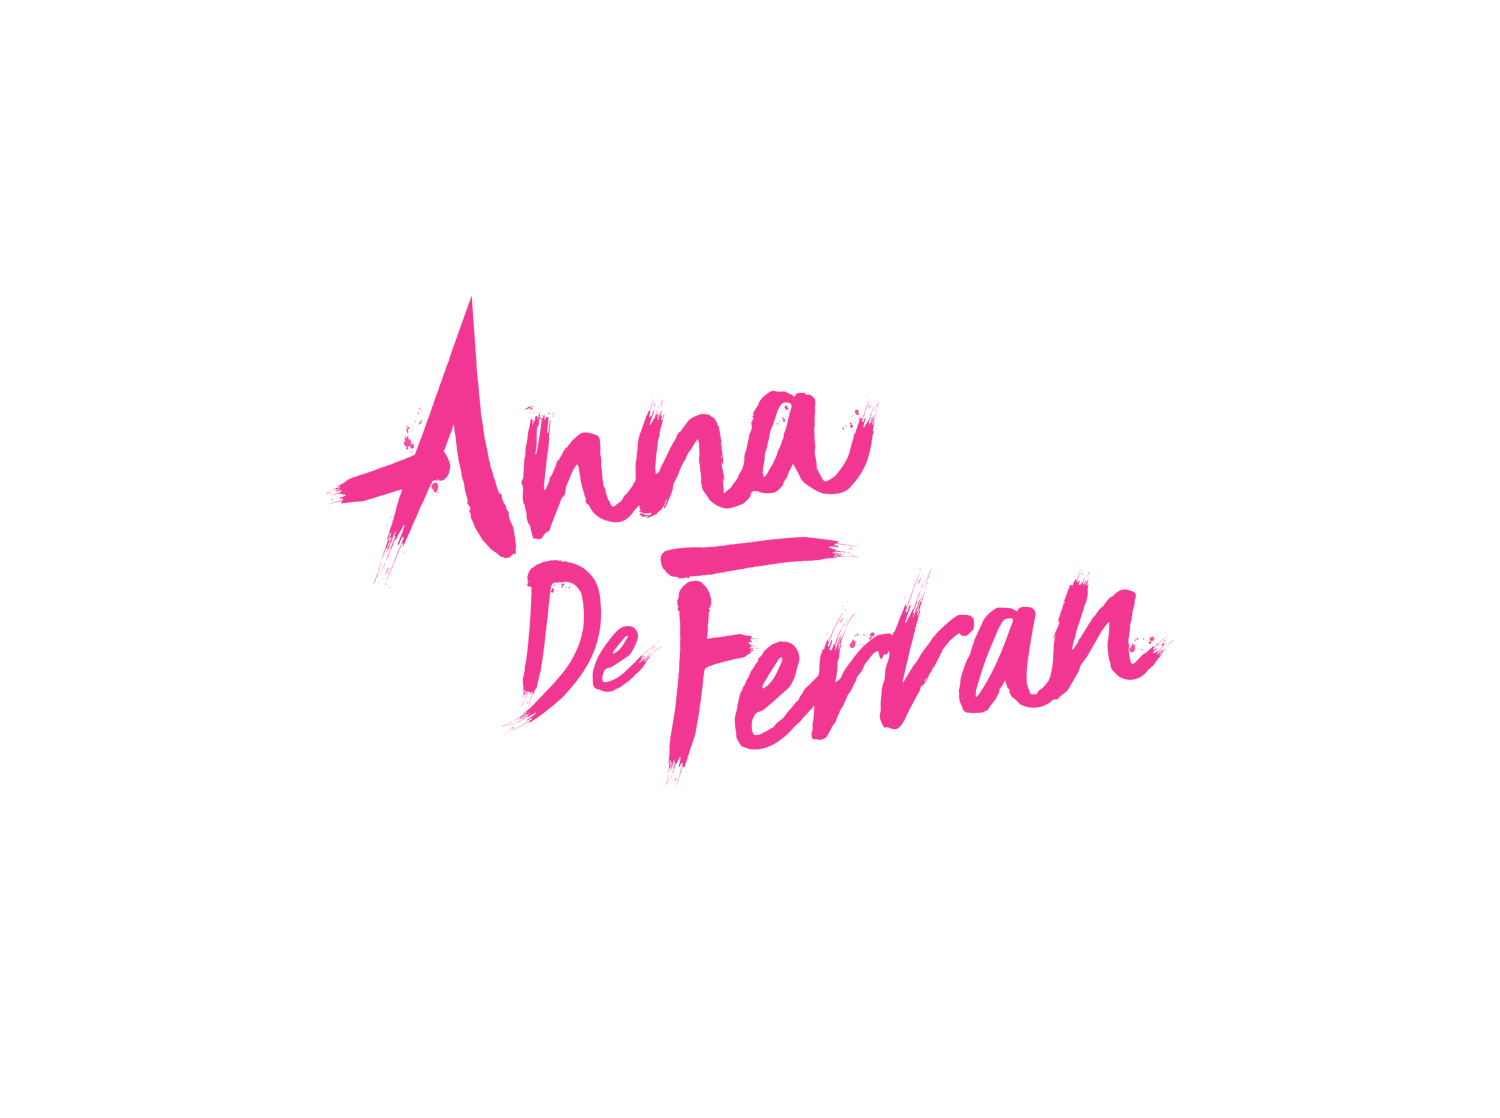 Anna de Ferran